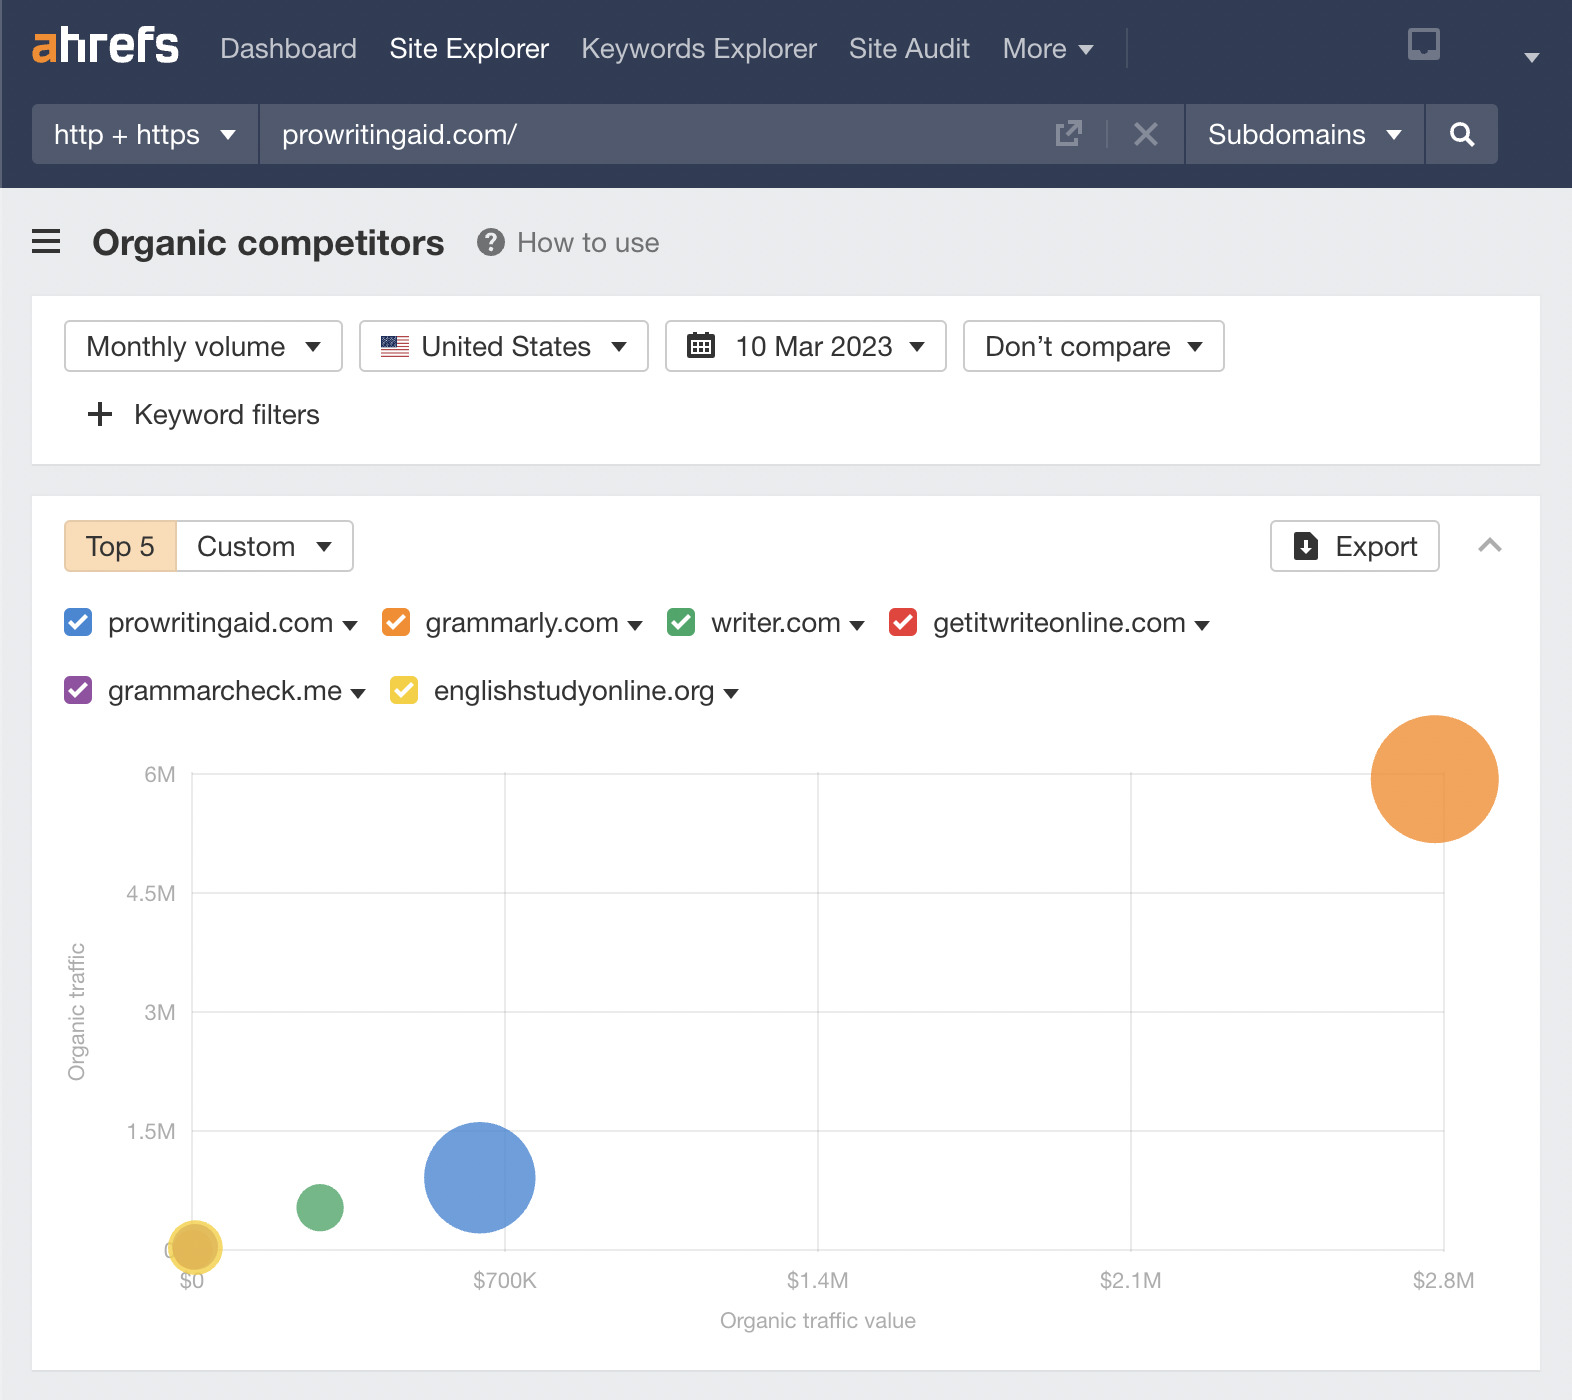 Organic competitors overview, via Ahrefs' Site Explorer